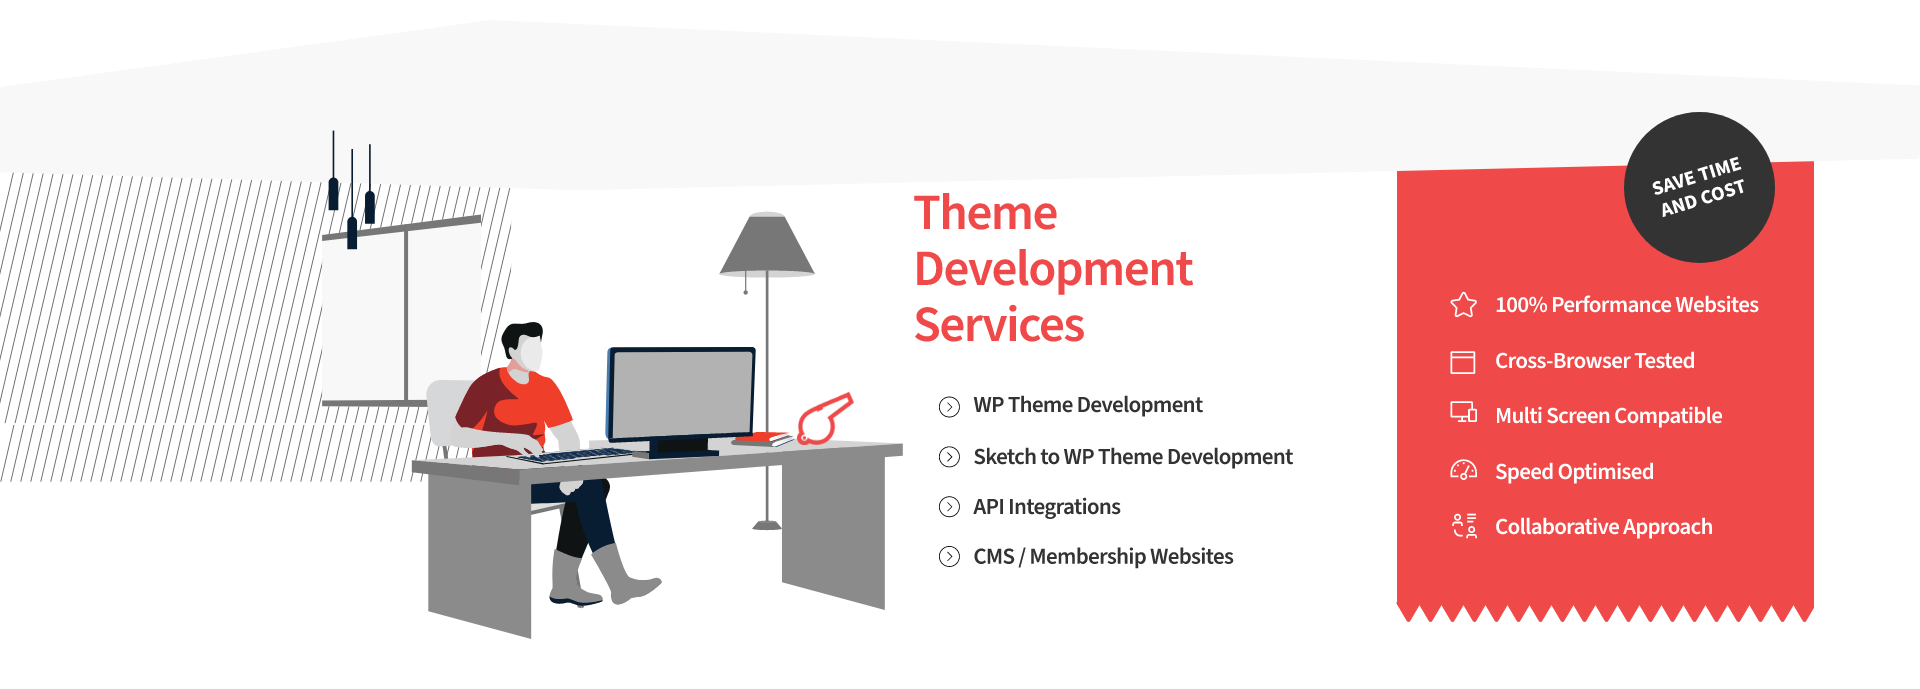 Custom WordPress Theme Development Services - ColorWhistle